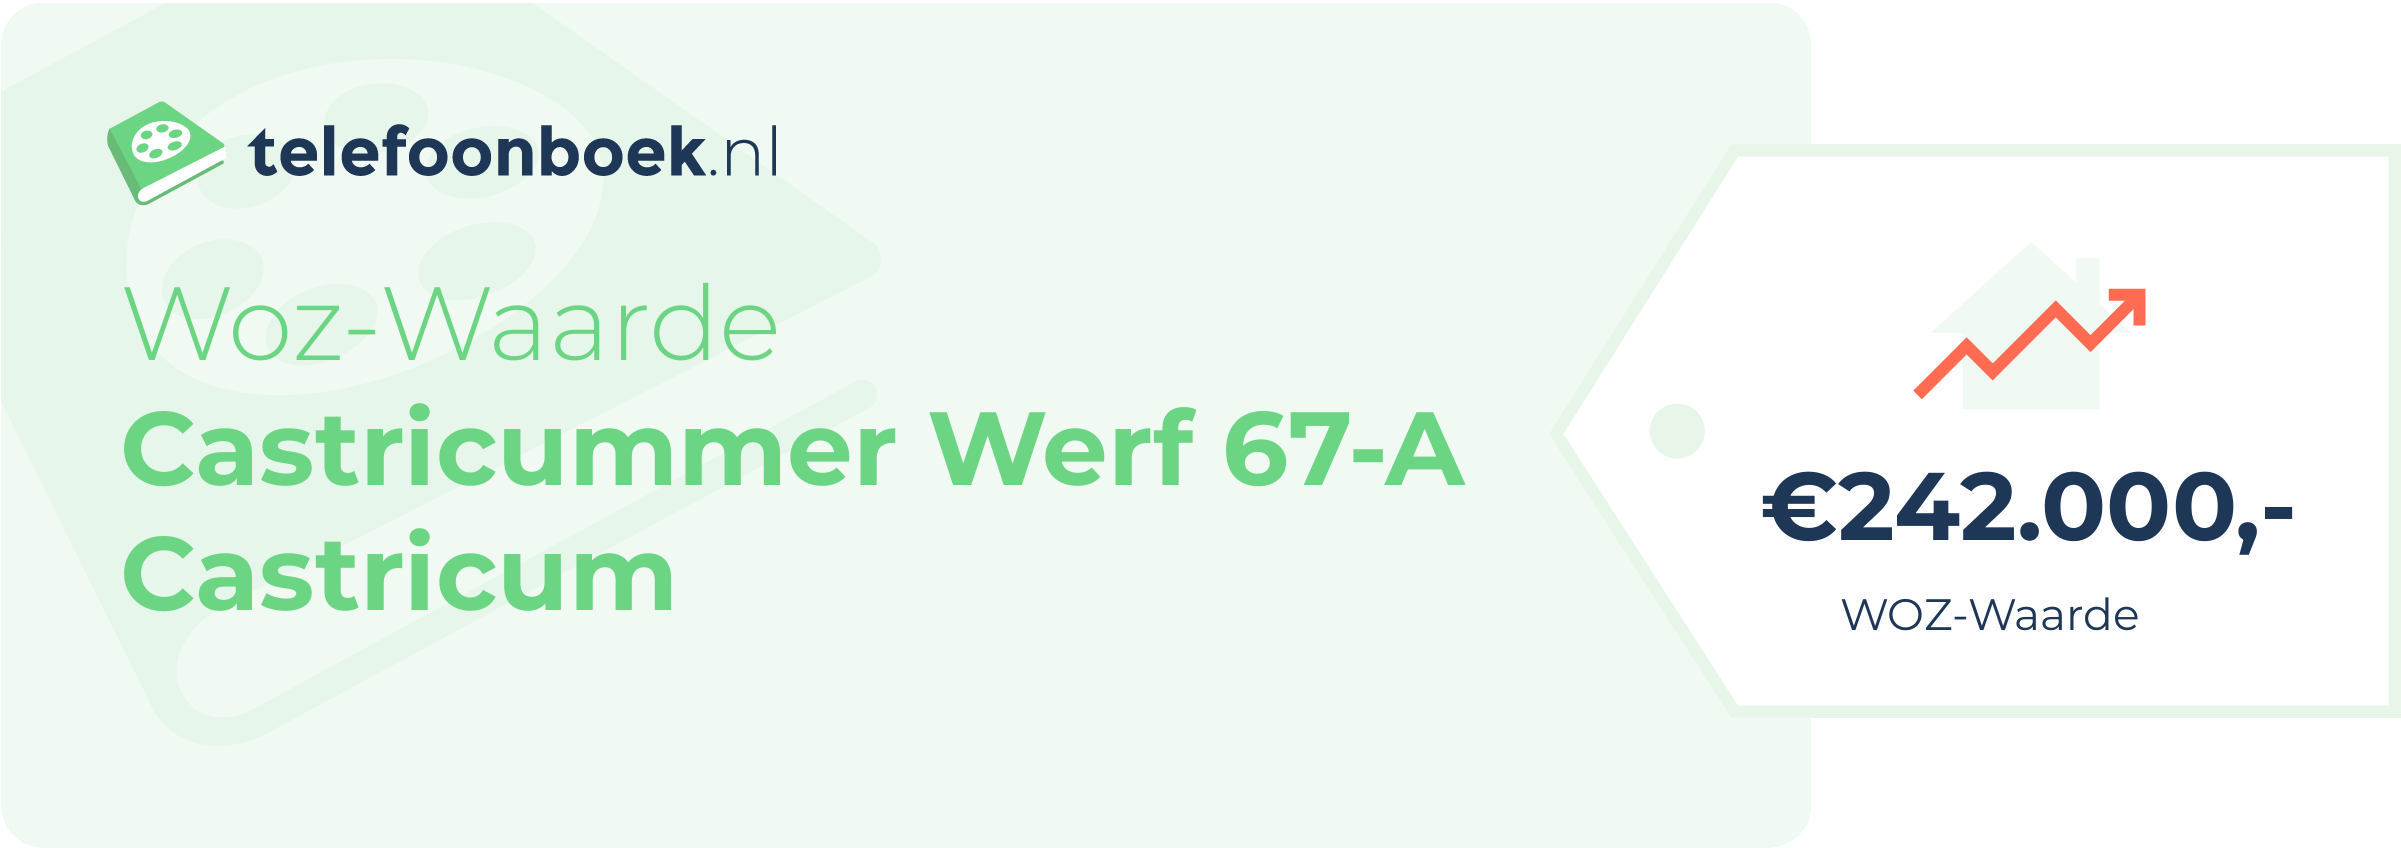 WOZ-waarde Castricummer Werf 67-A Castricum